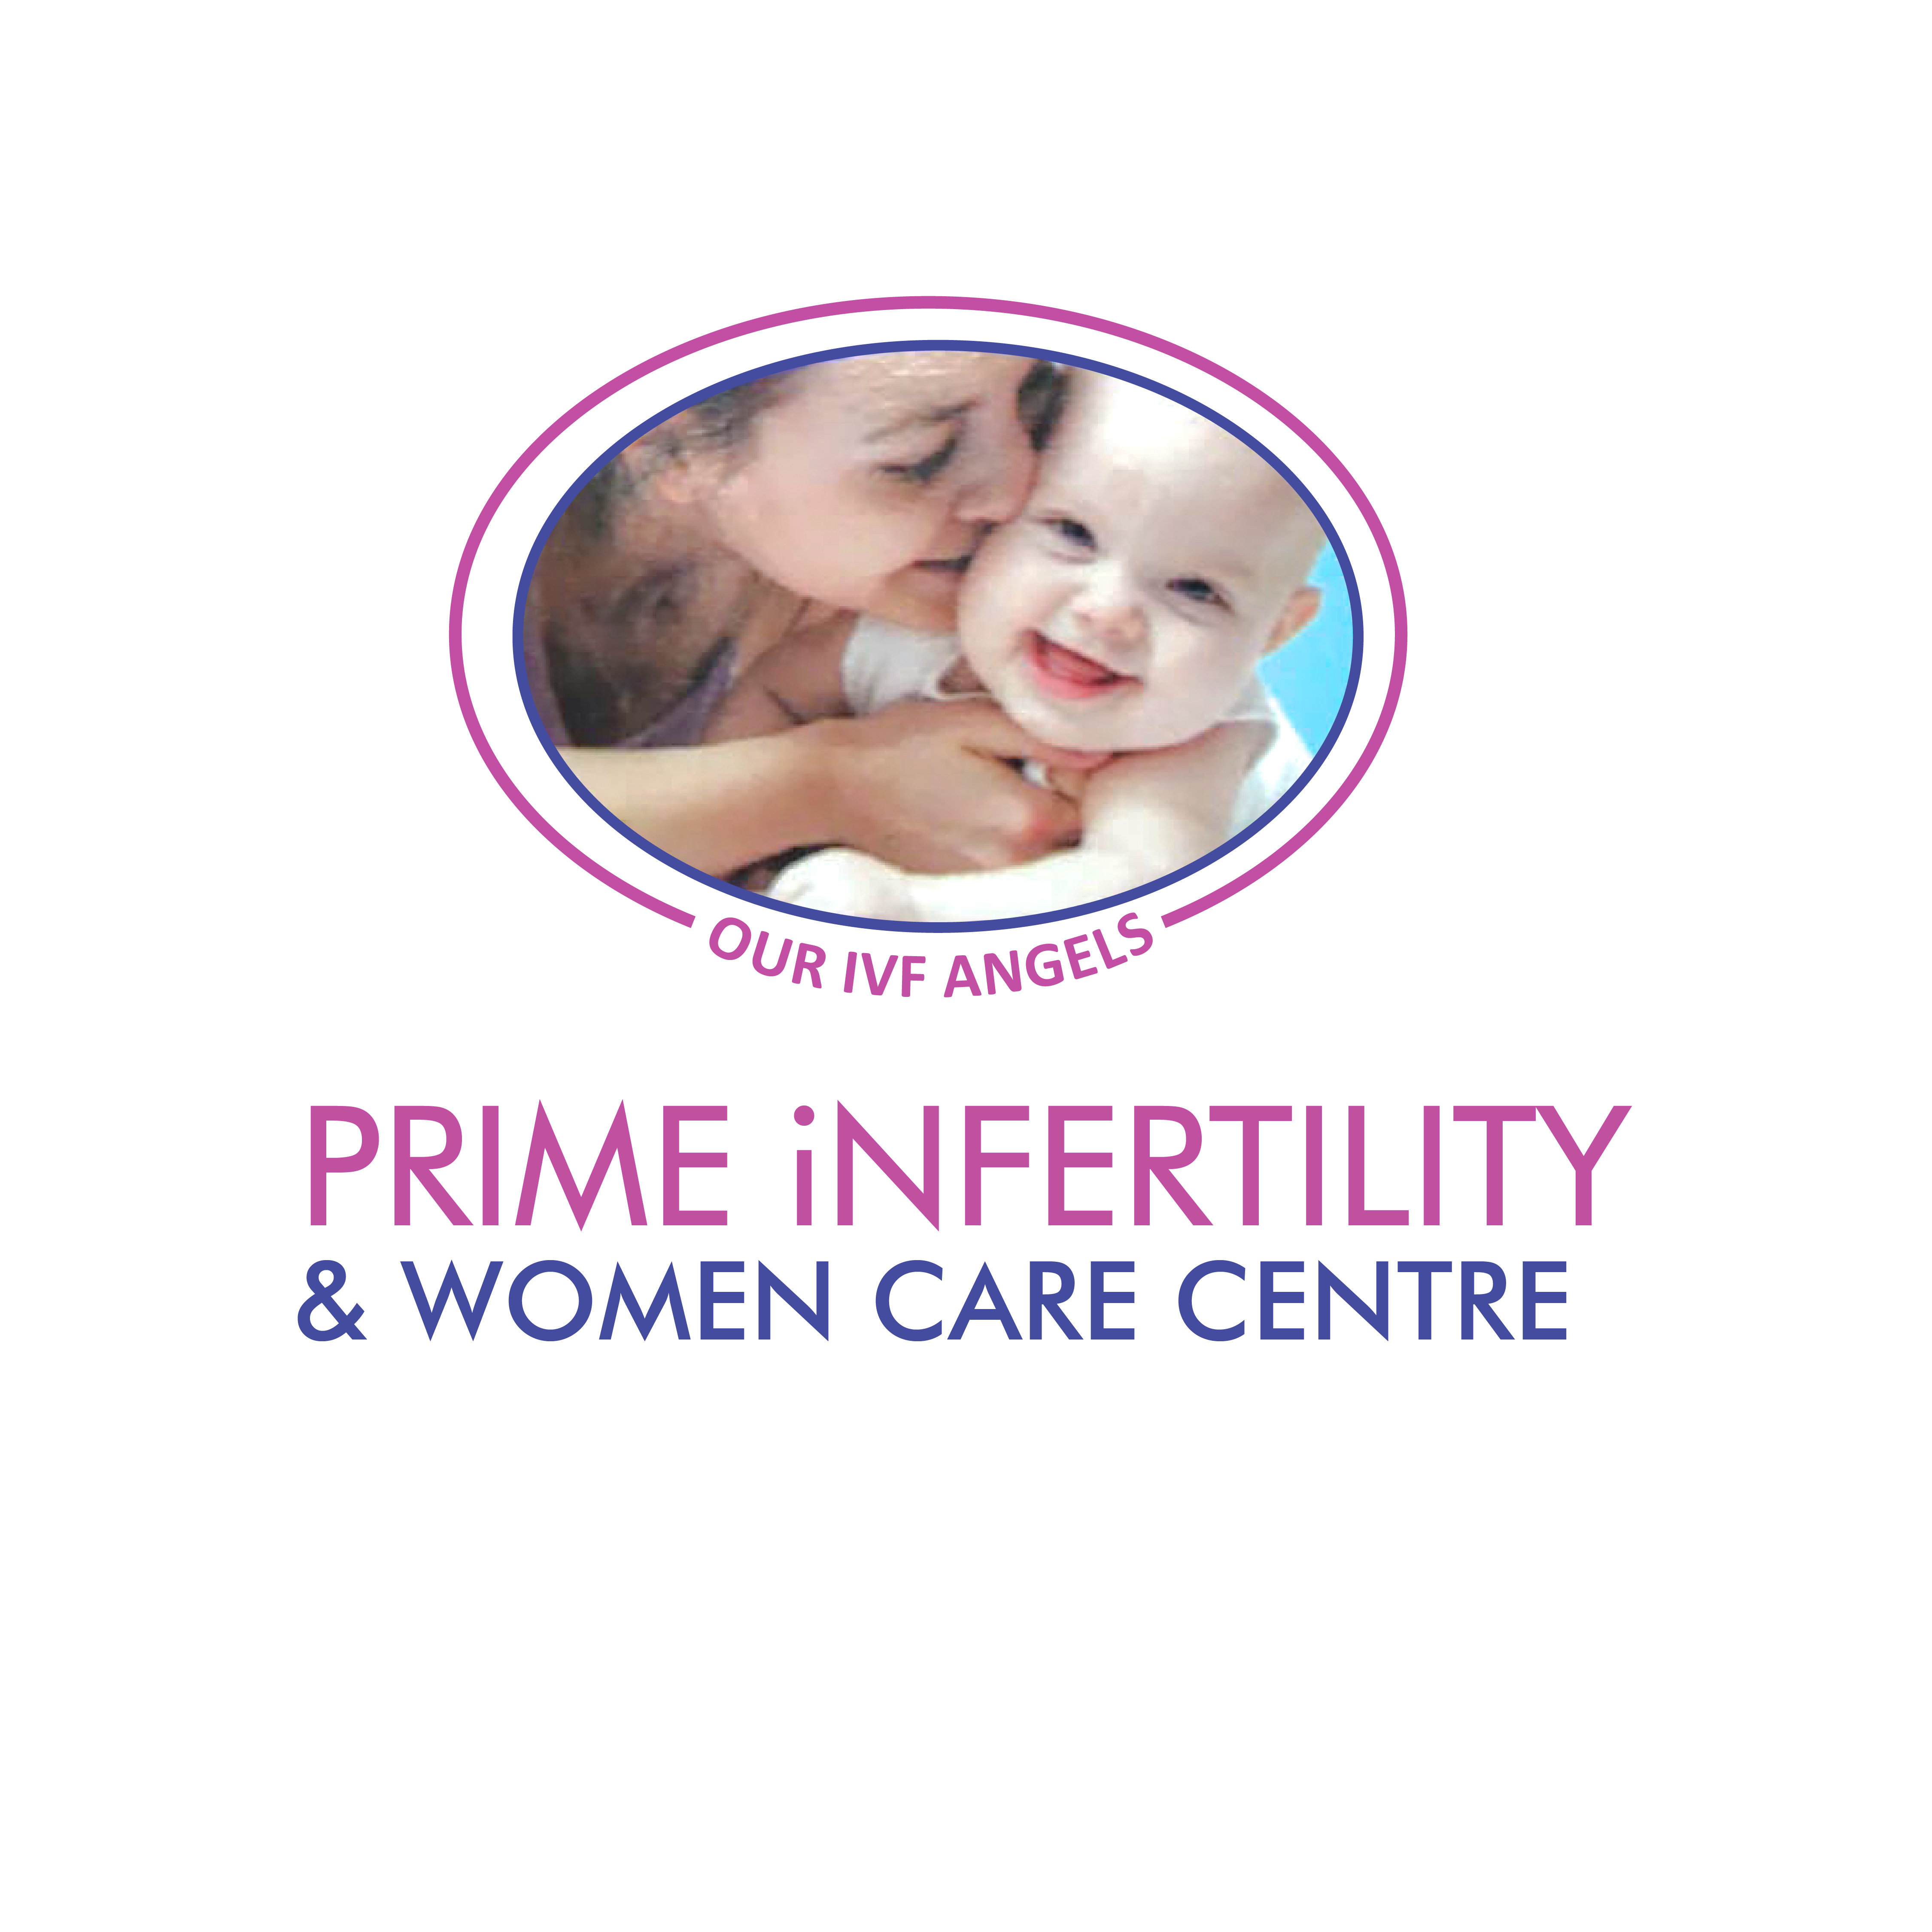 Prime Infertility & Women Care Center|Hospitals|Medical Services